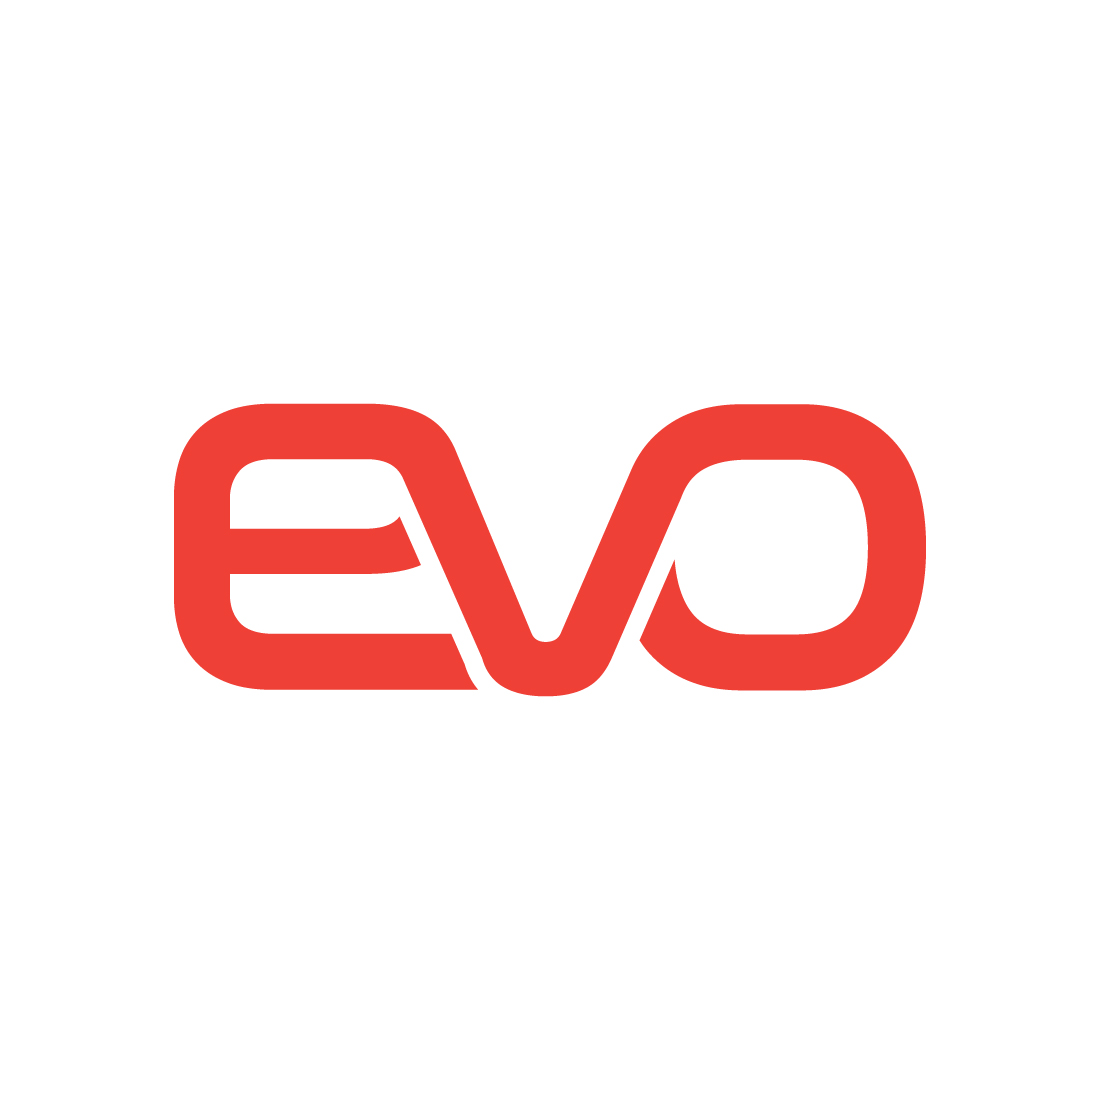 EVO letter logo preview image.